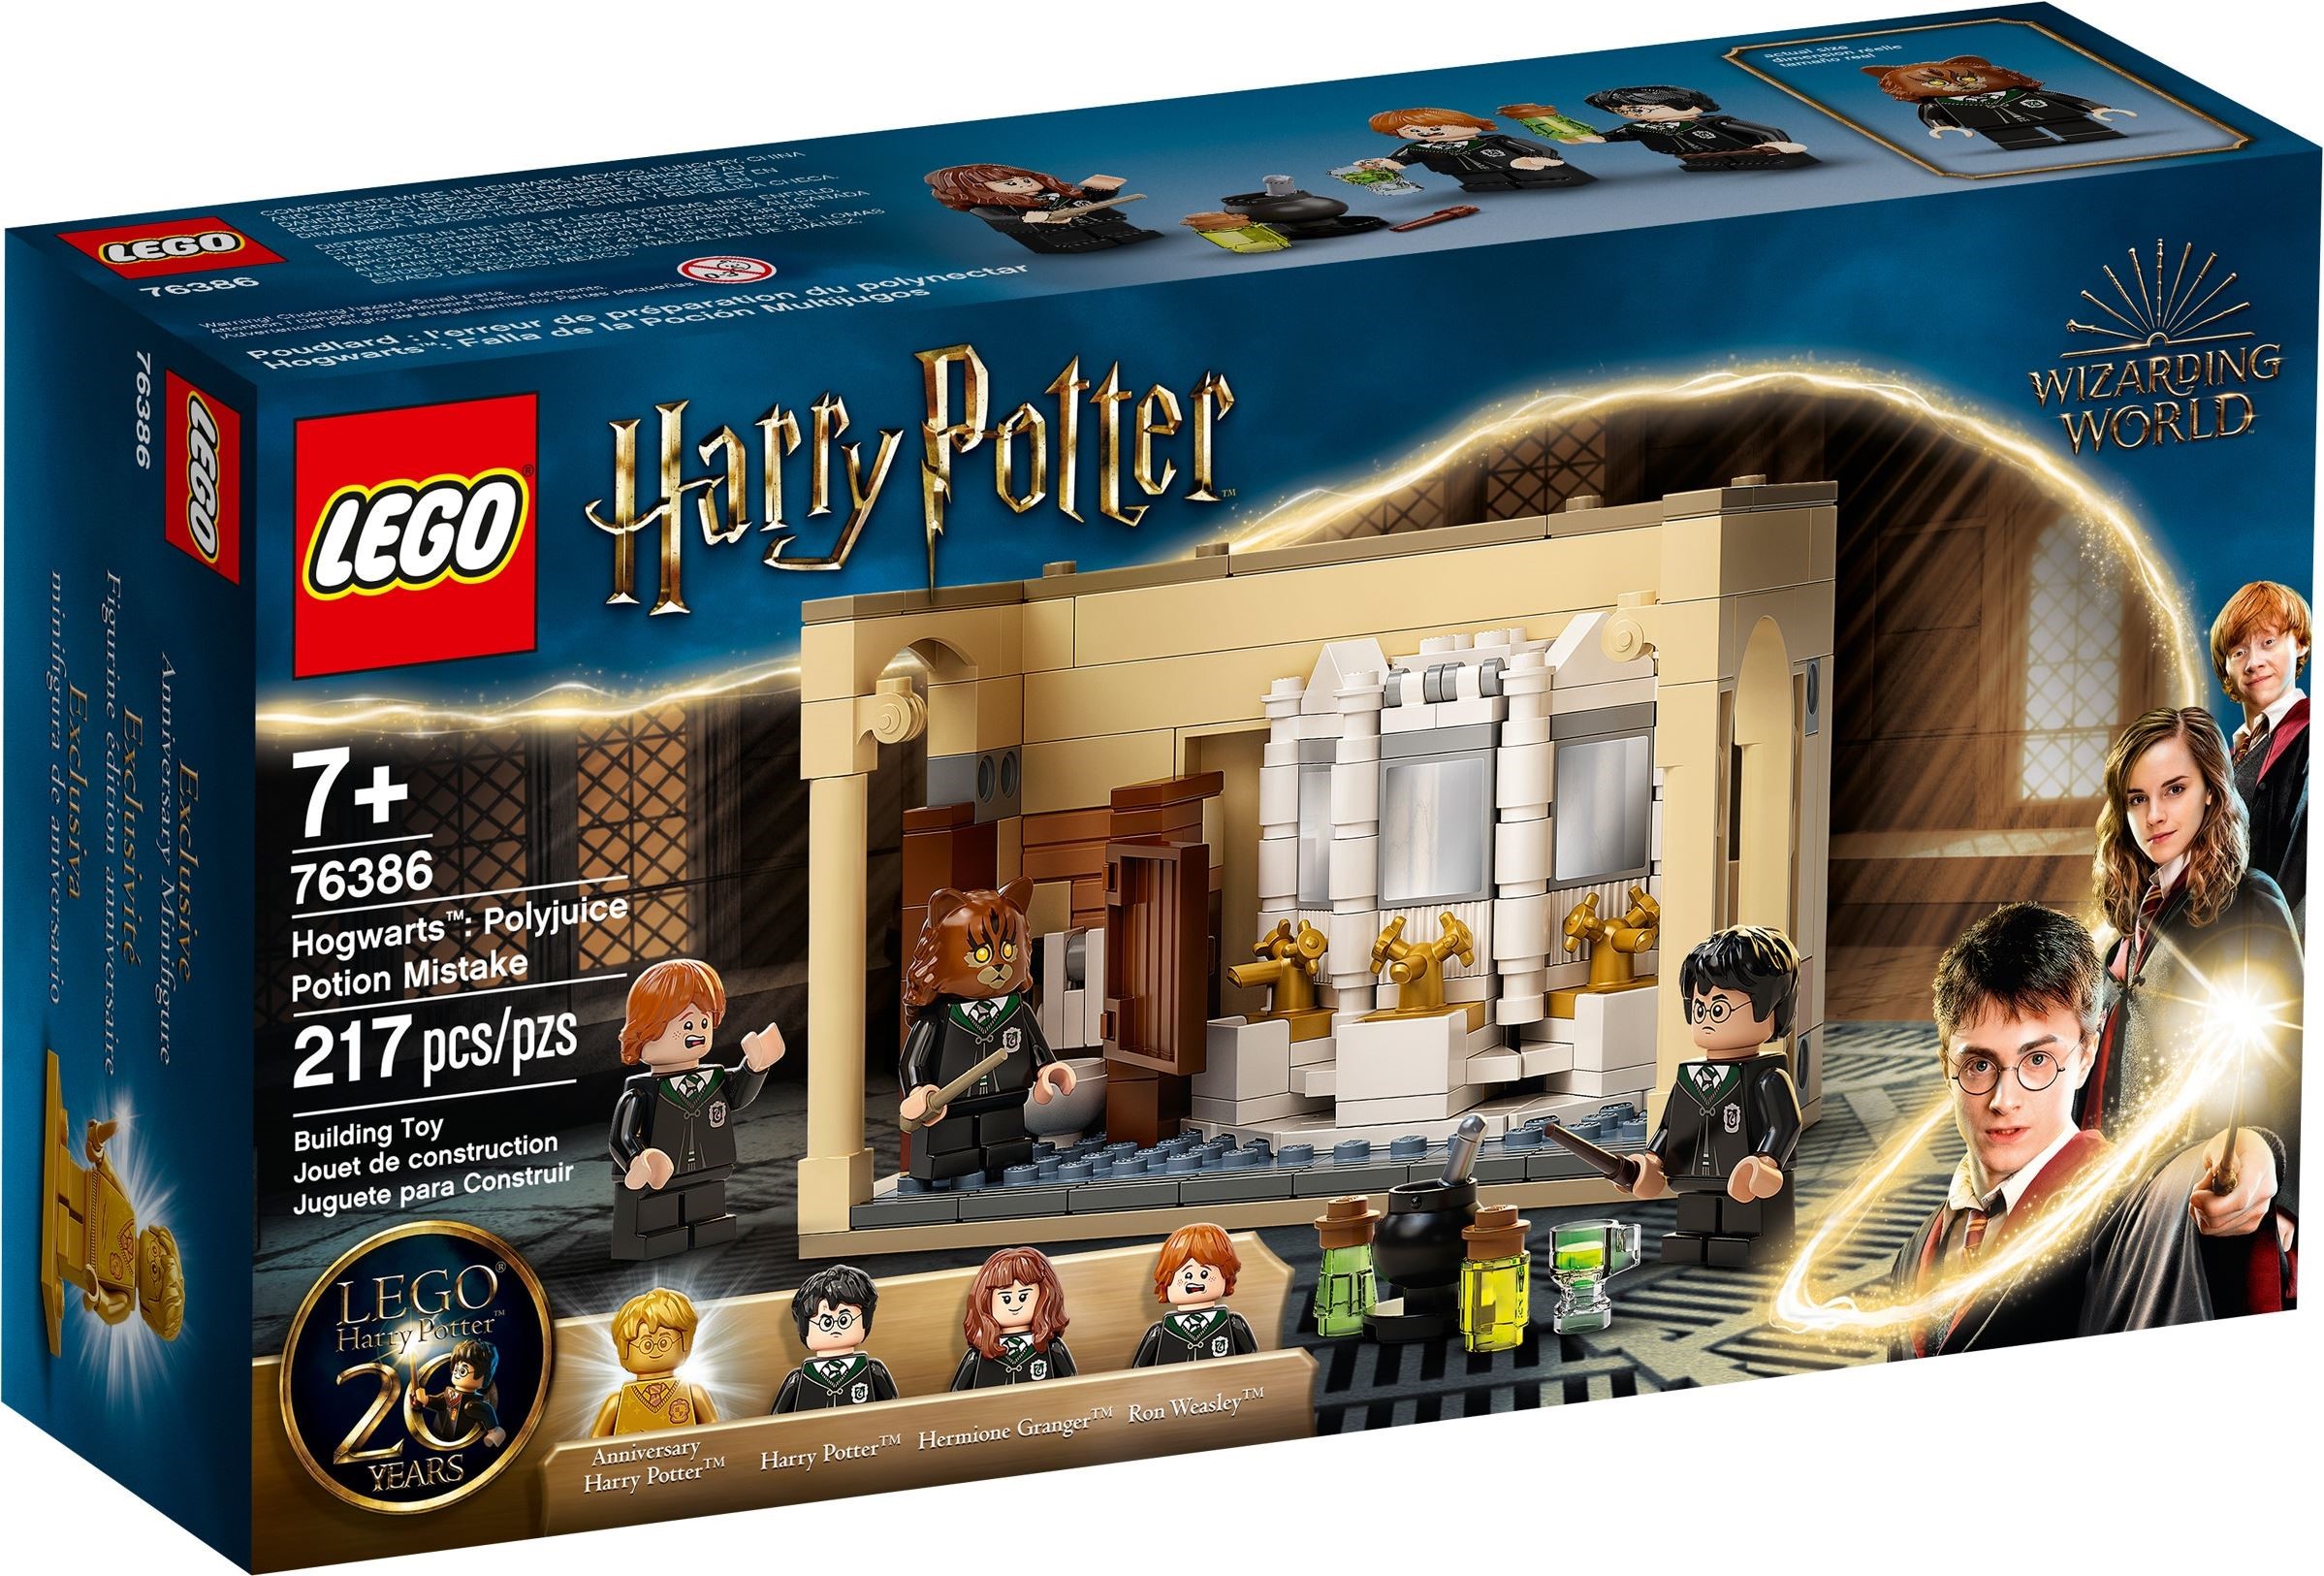 LEGO 76386 Harry Potter Hogwarts Polyjuice Potion Mistake New and Sealed 